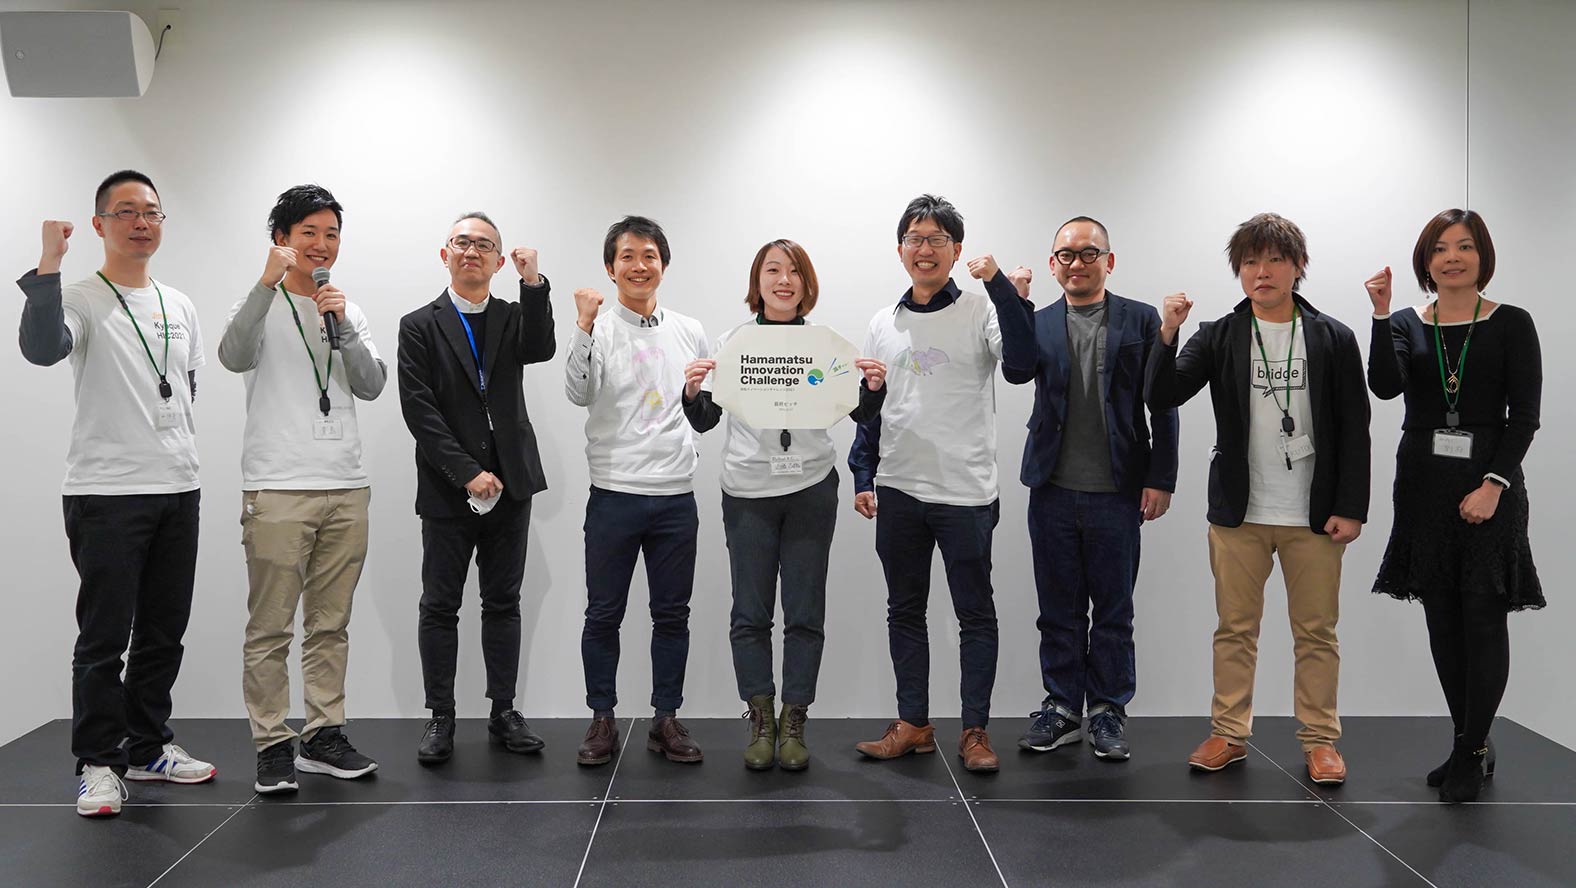 Roland DG team participated in the Hamamatsu Innovation Challenge program